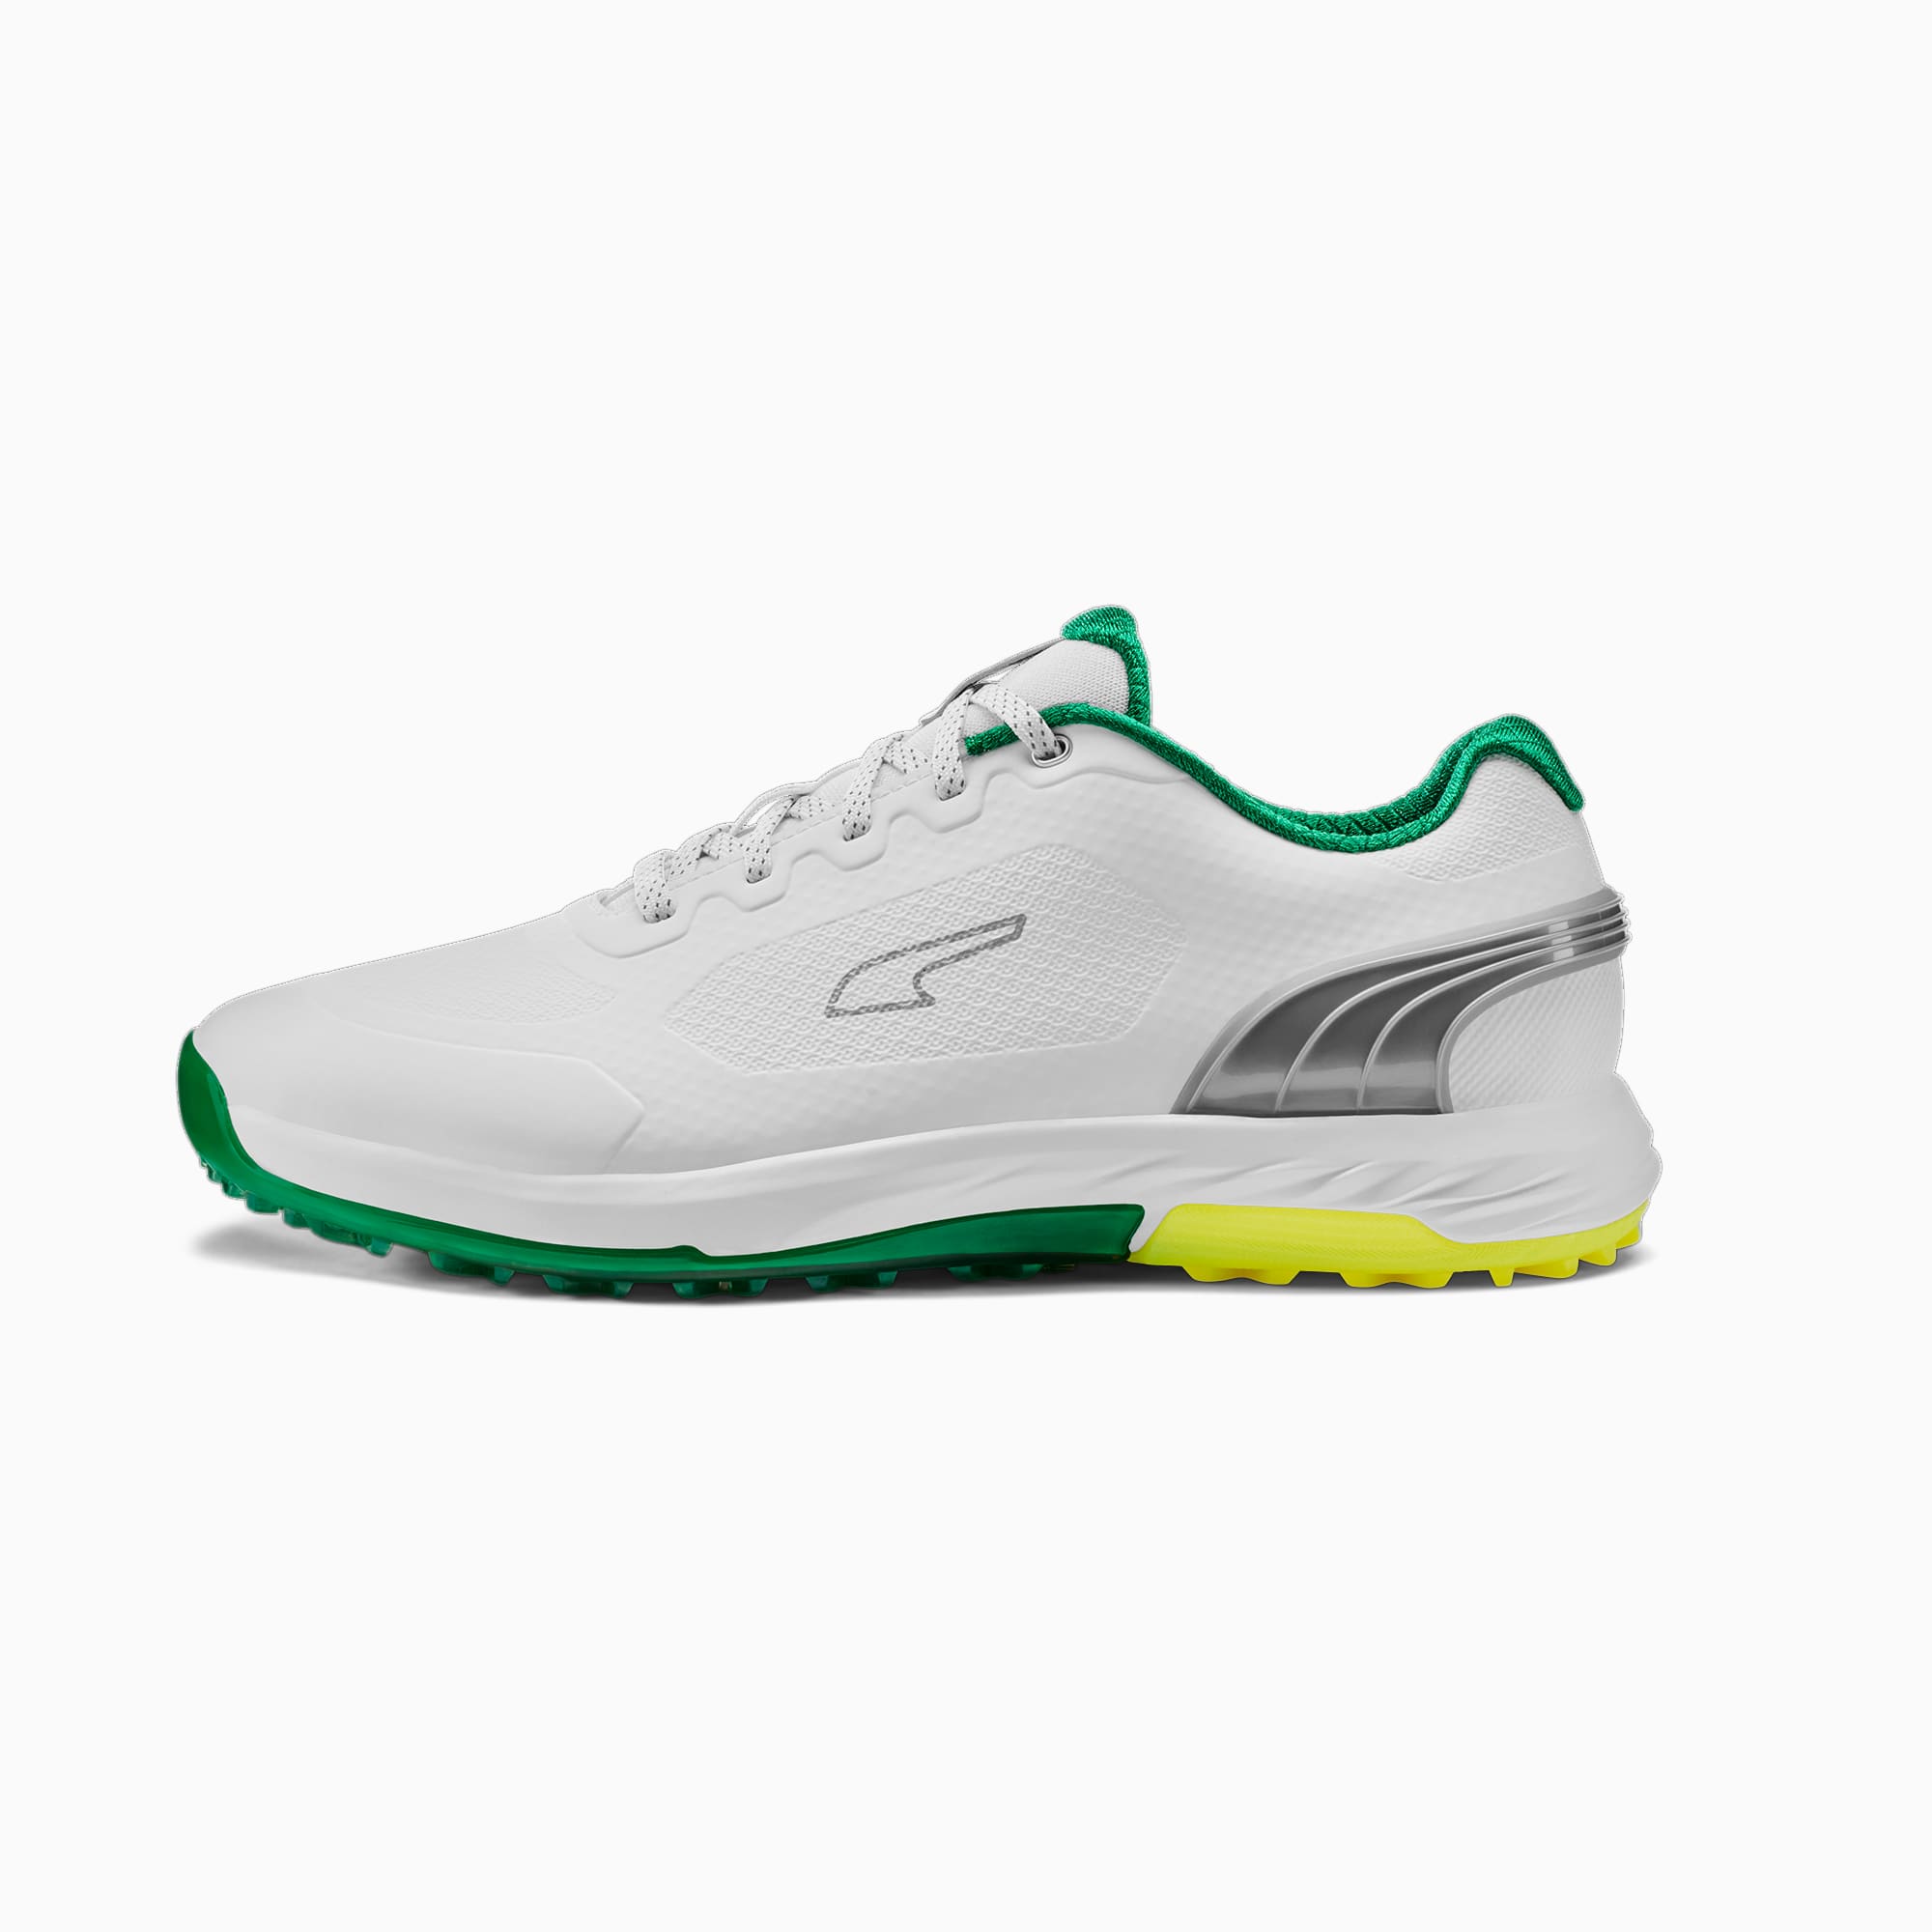 puma chaussures de golf alphacat nitro homme, blanc/vert/jaune